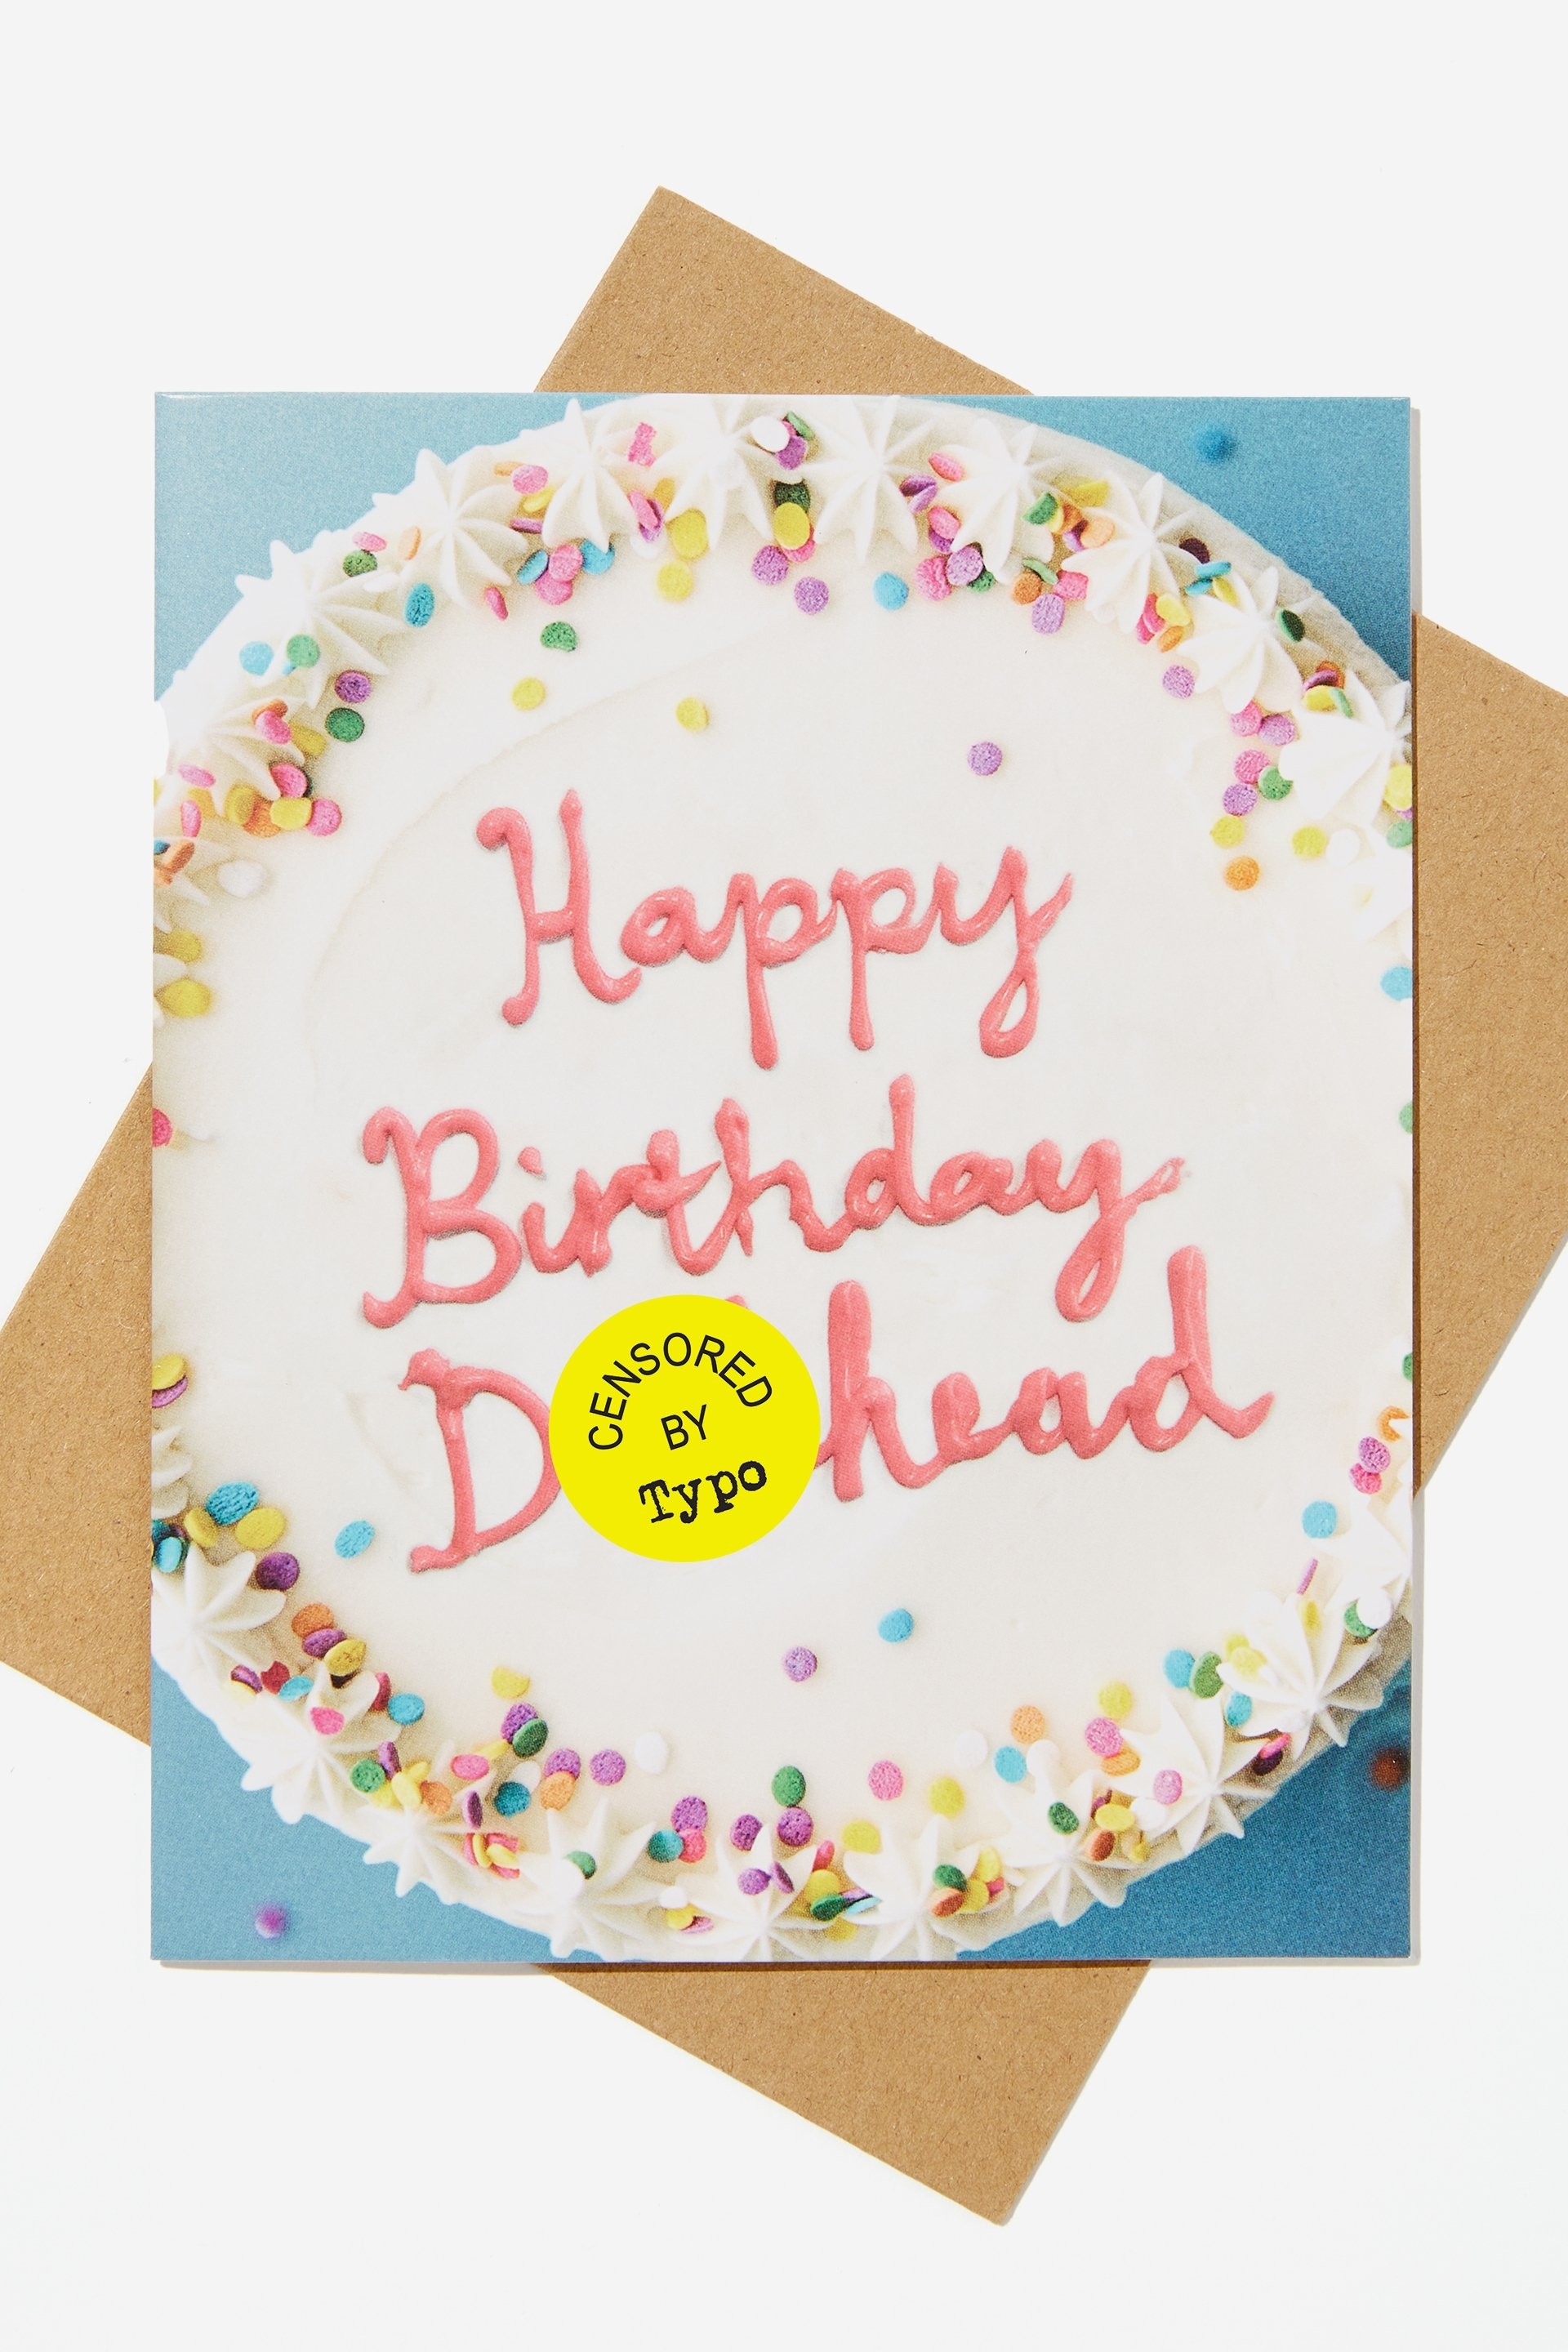 Typo - Funny Birthday Card - Cake happy birthday dickhead!